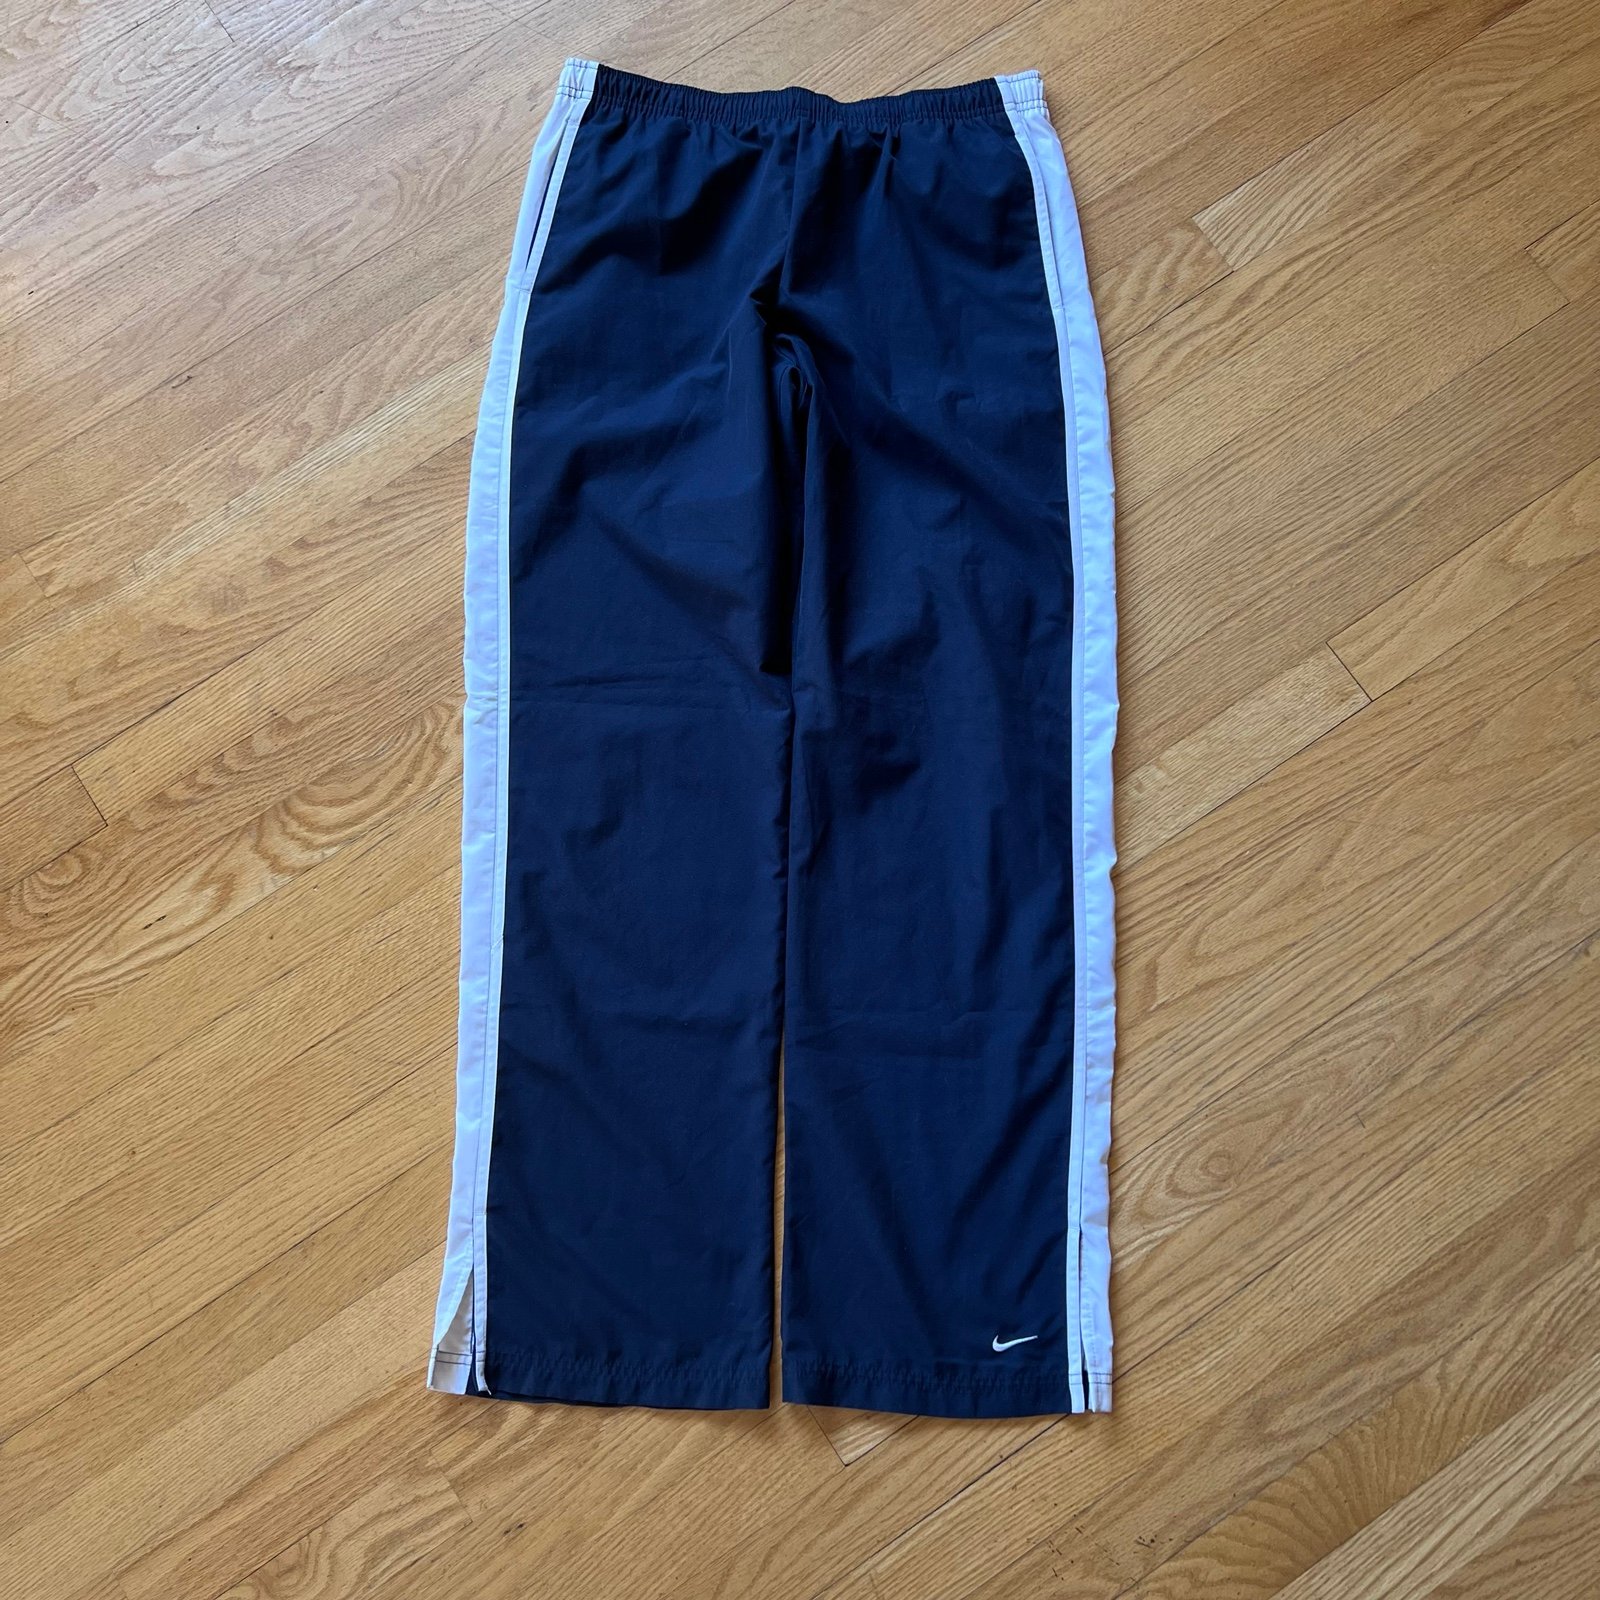 Vintage Y2K Nike Track Pants Navy / White 2000s Windbreaker Bottoms Size Medium jV2mSkfKt